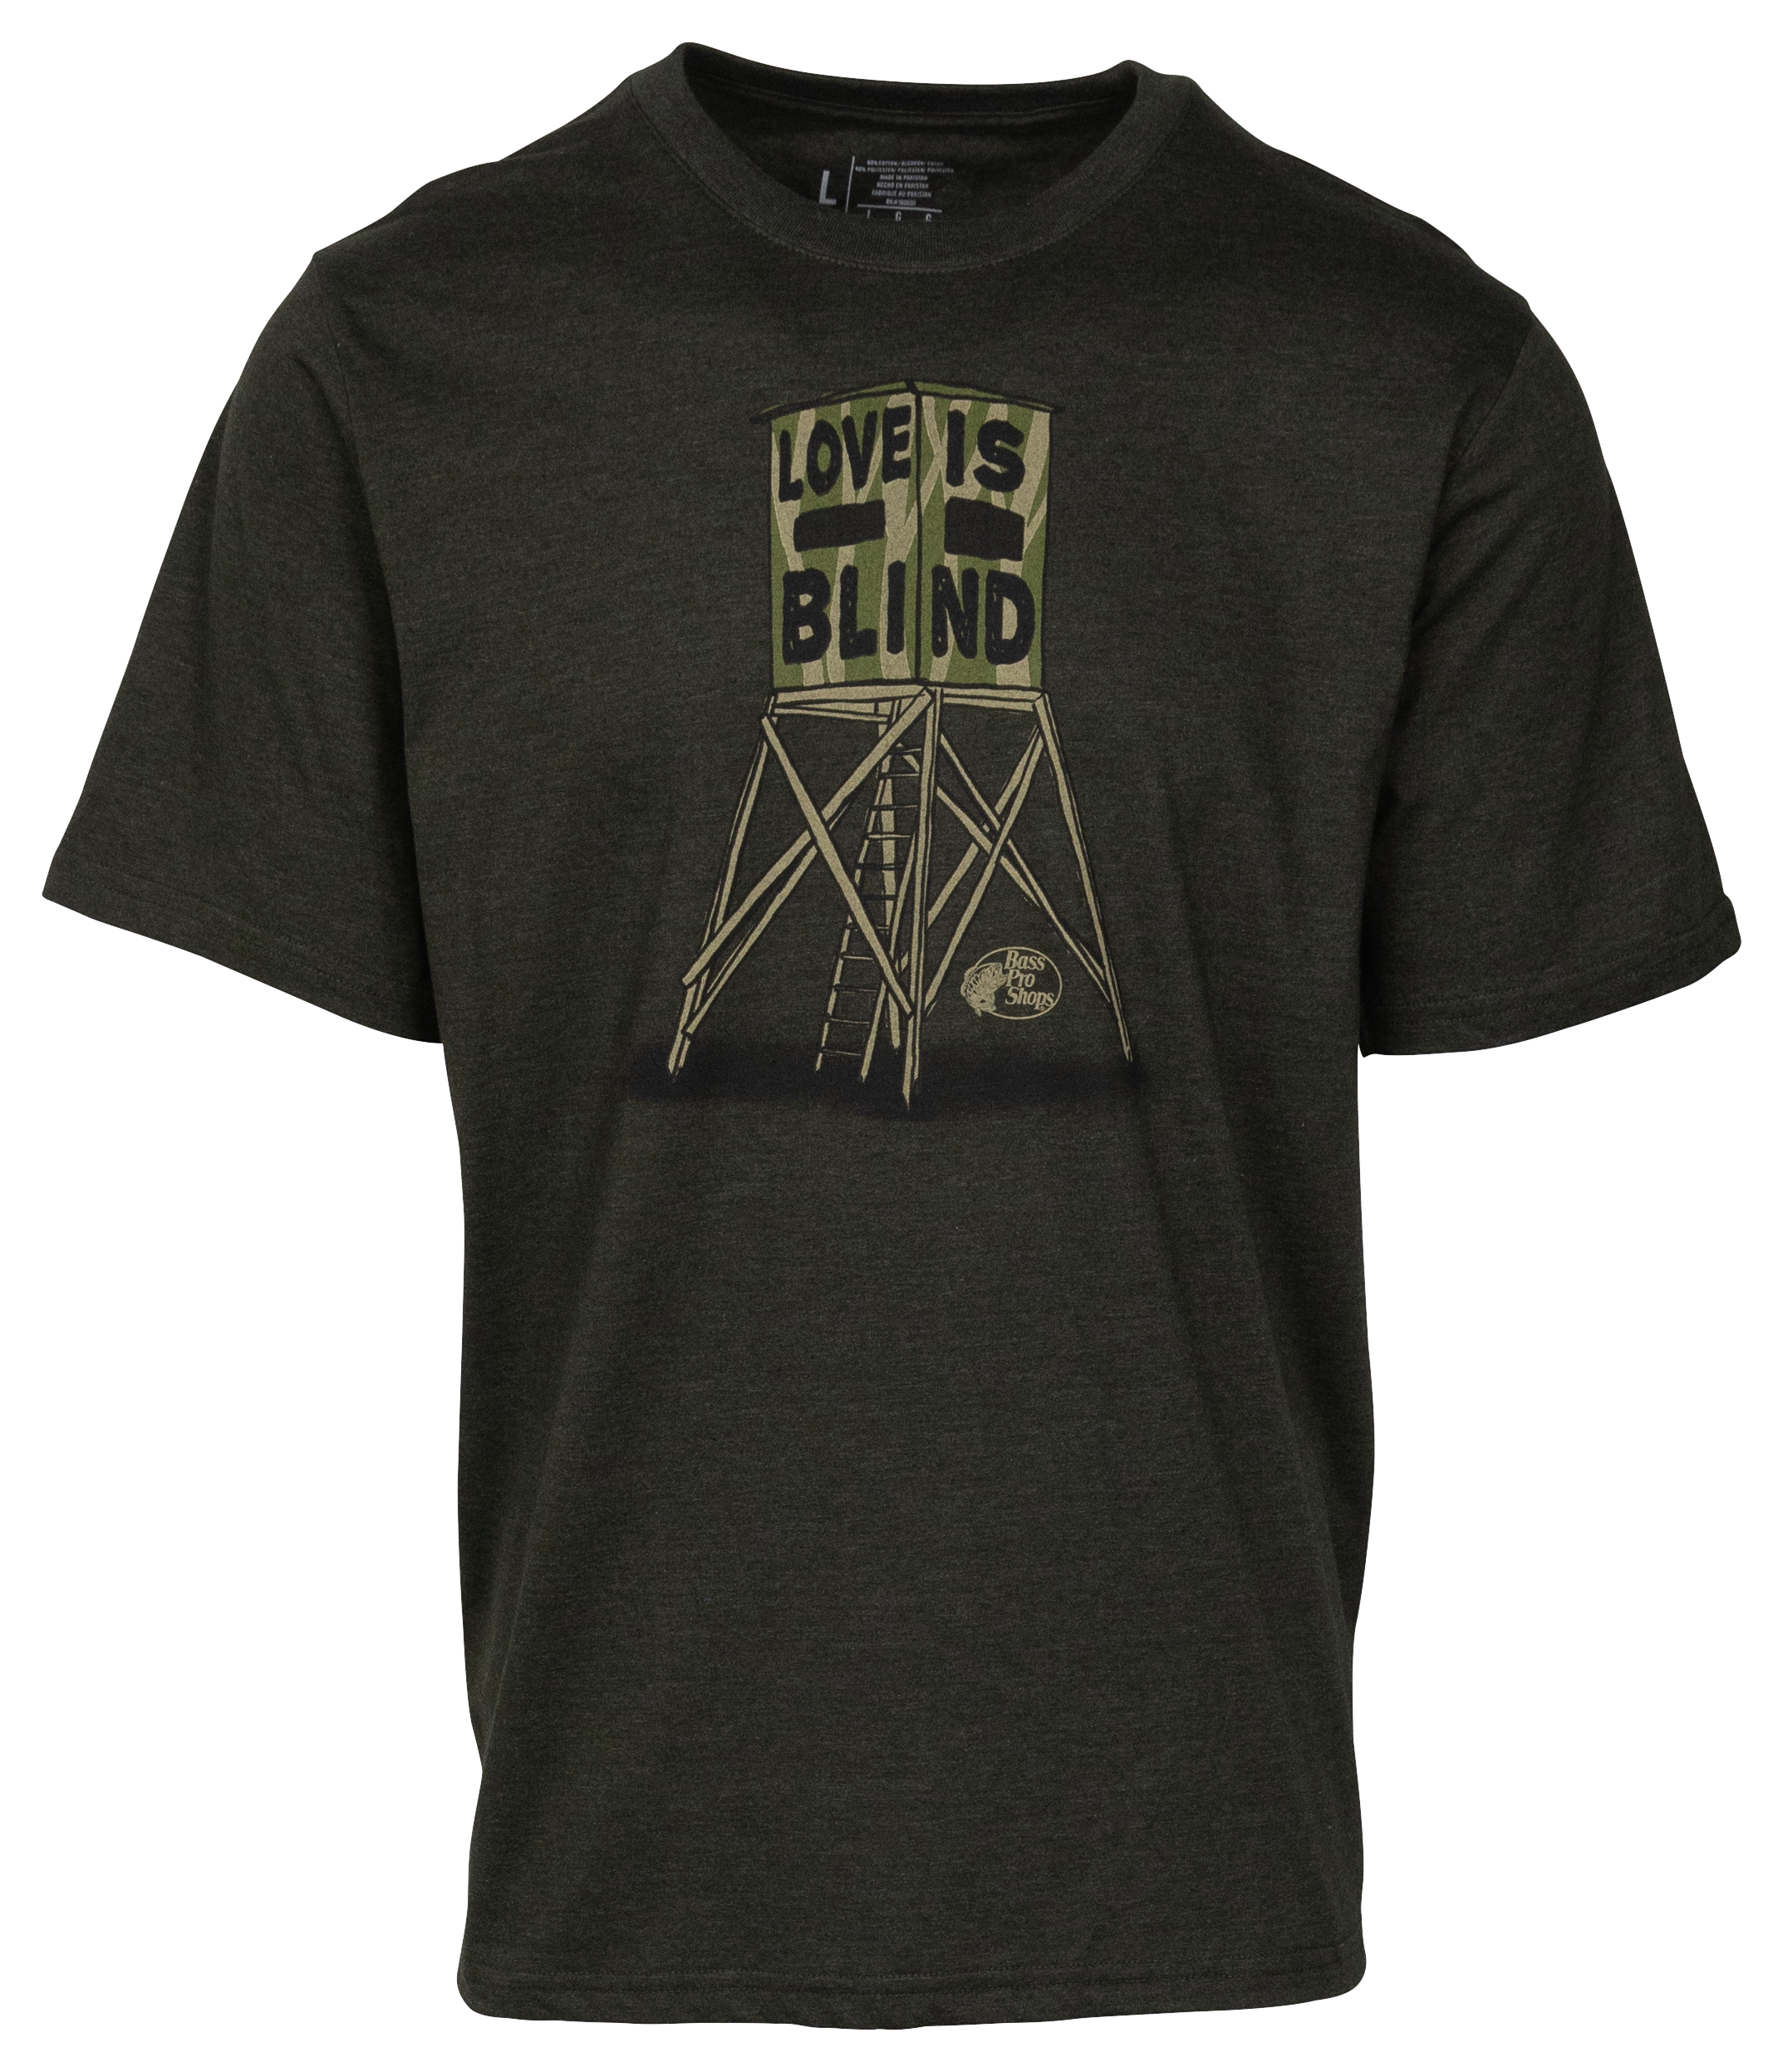 Bass Pro Shops Love Is Blind Short-Sleeve T-Shirt for Men - Olive Heather - M